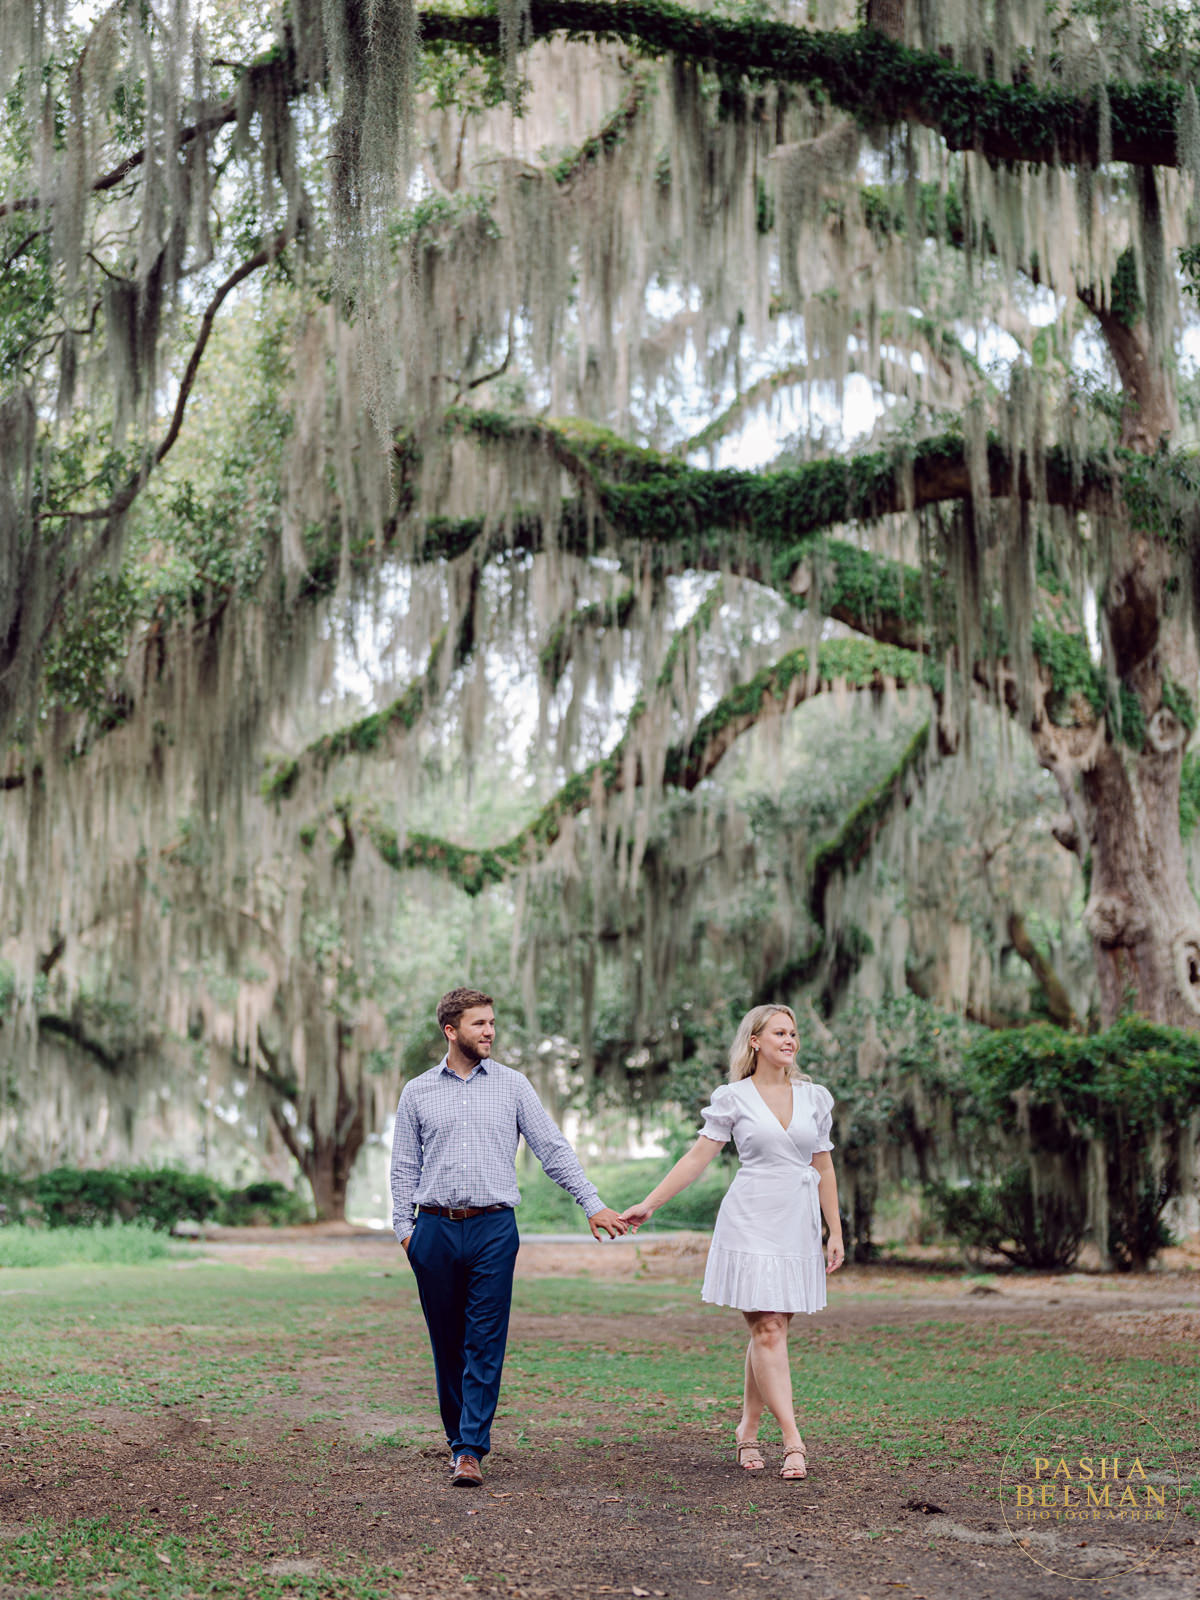 Classic Engagement Photo Ideas near Charleston, South Carolina 